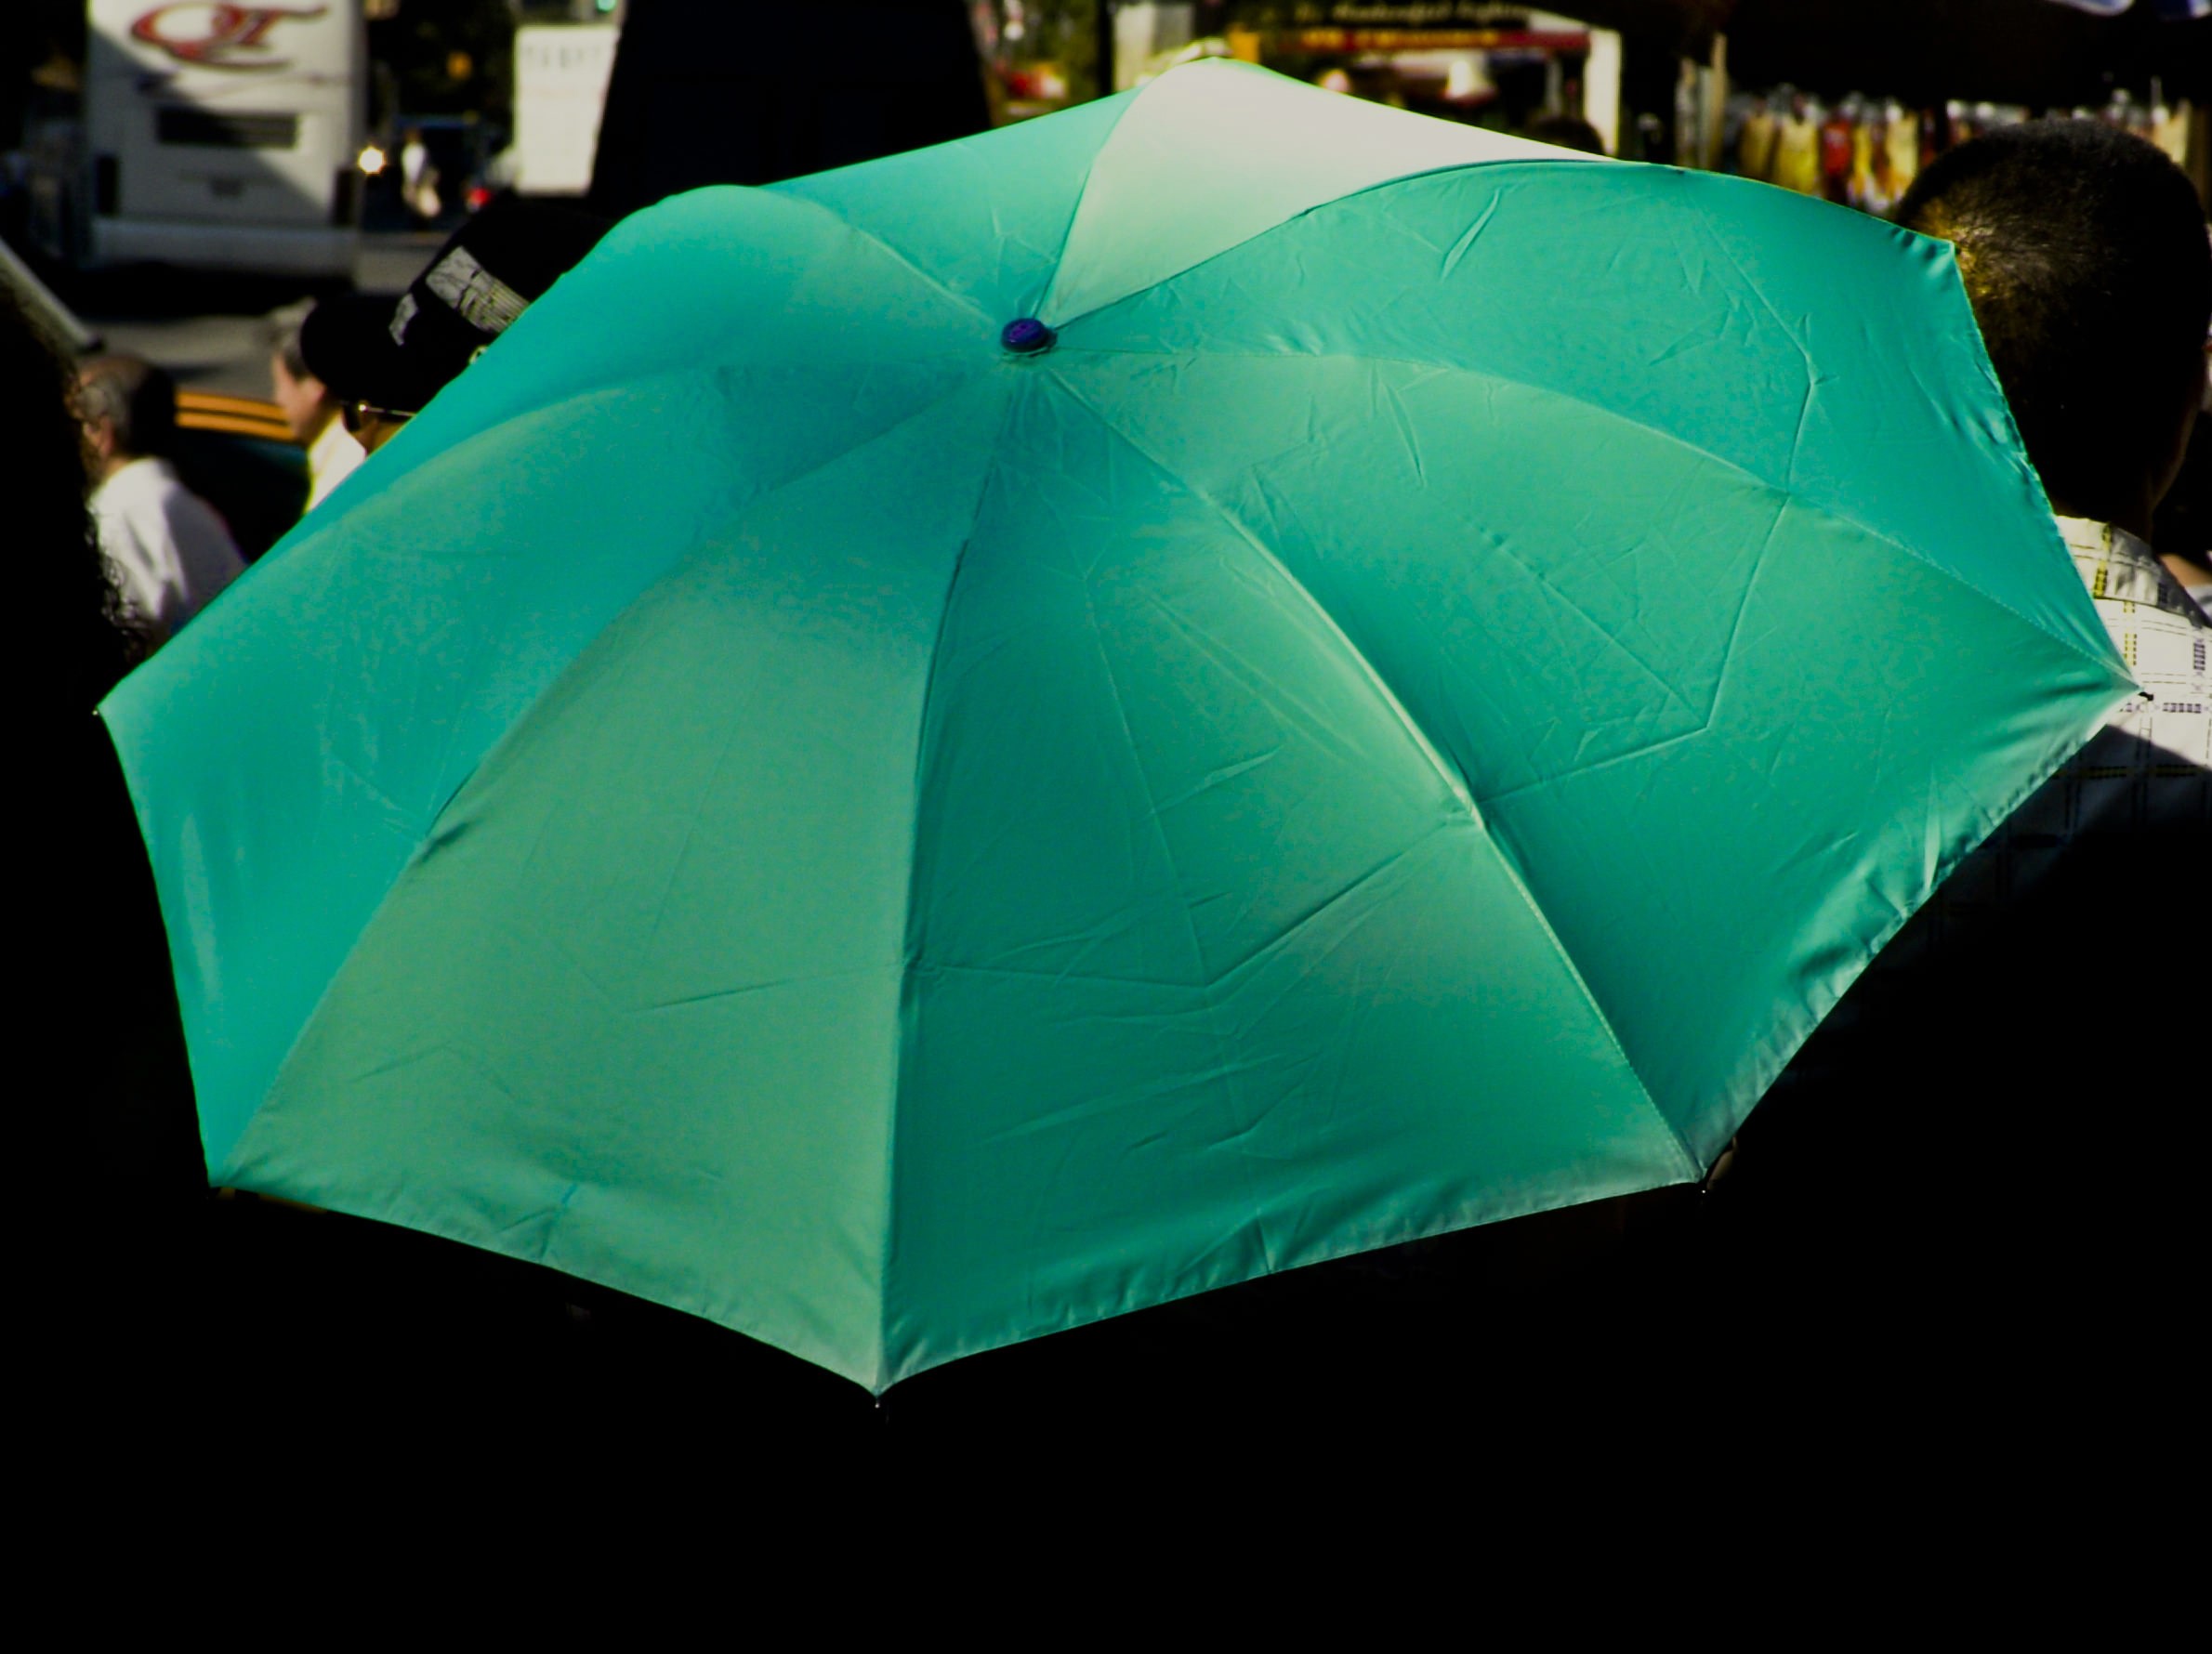 Umbrella Manufacturing Company in Bangladesh